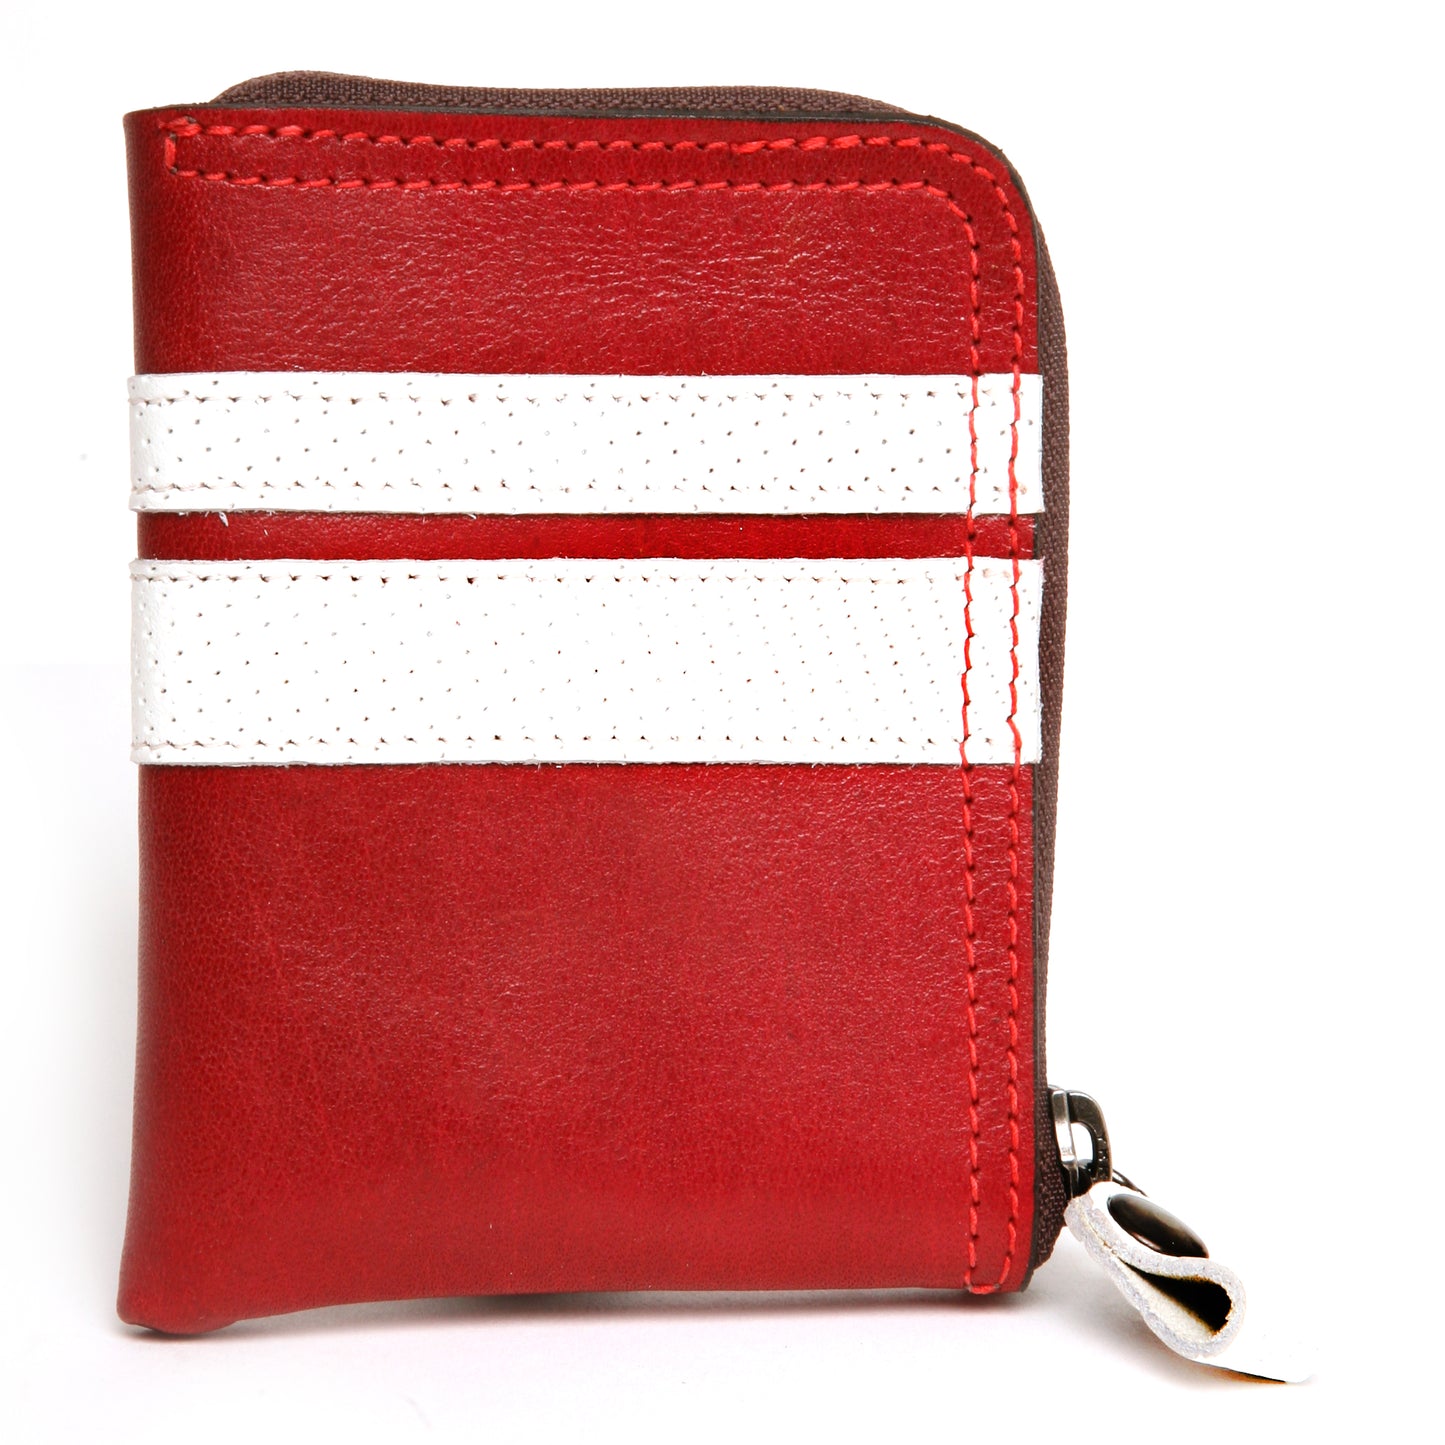 ZIP wallet striped red&white